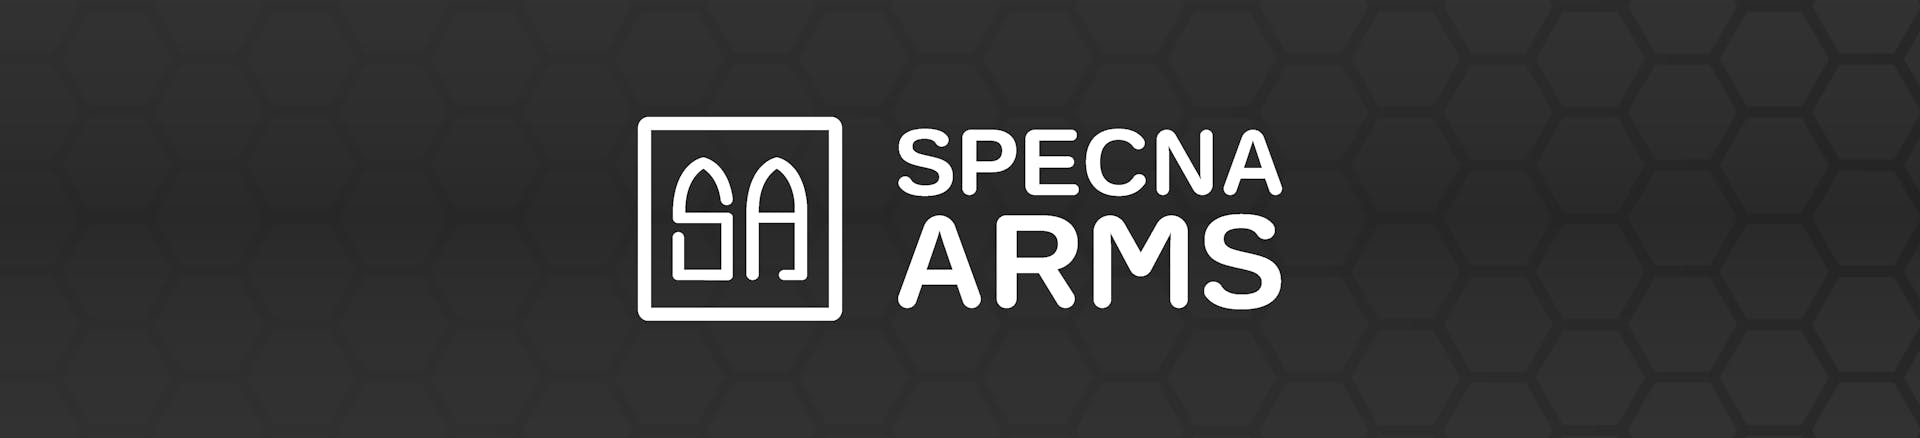 Specna Arms Airsoft